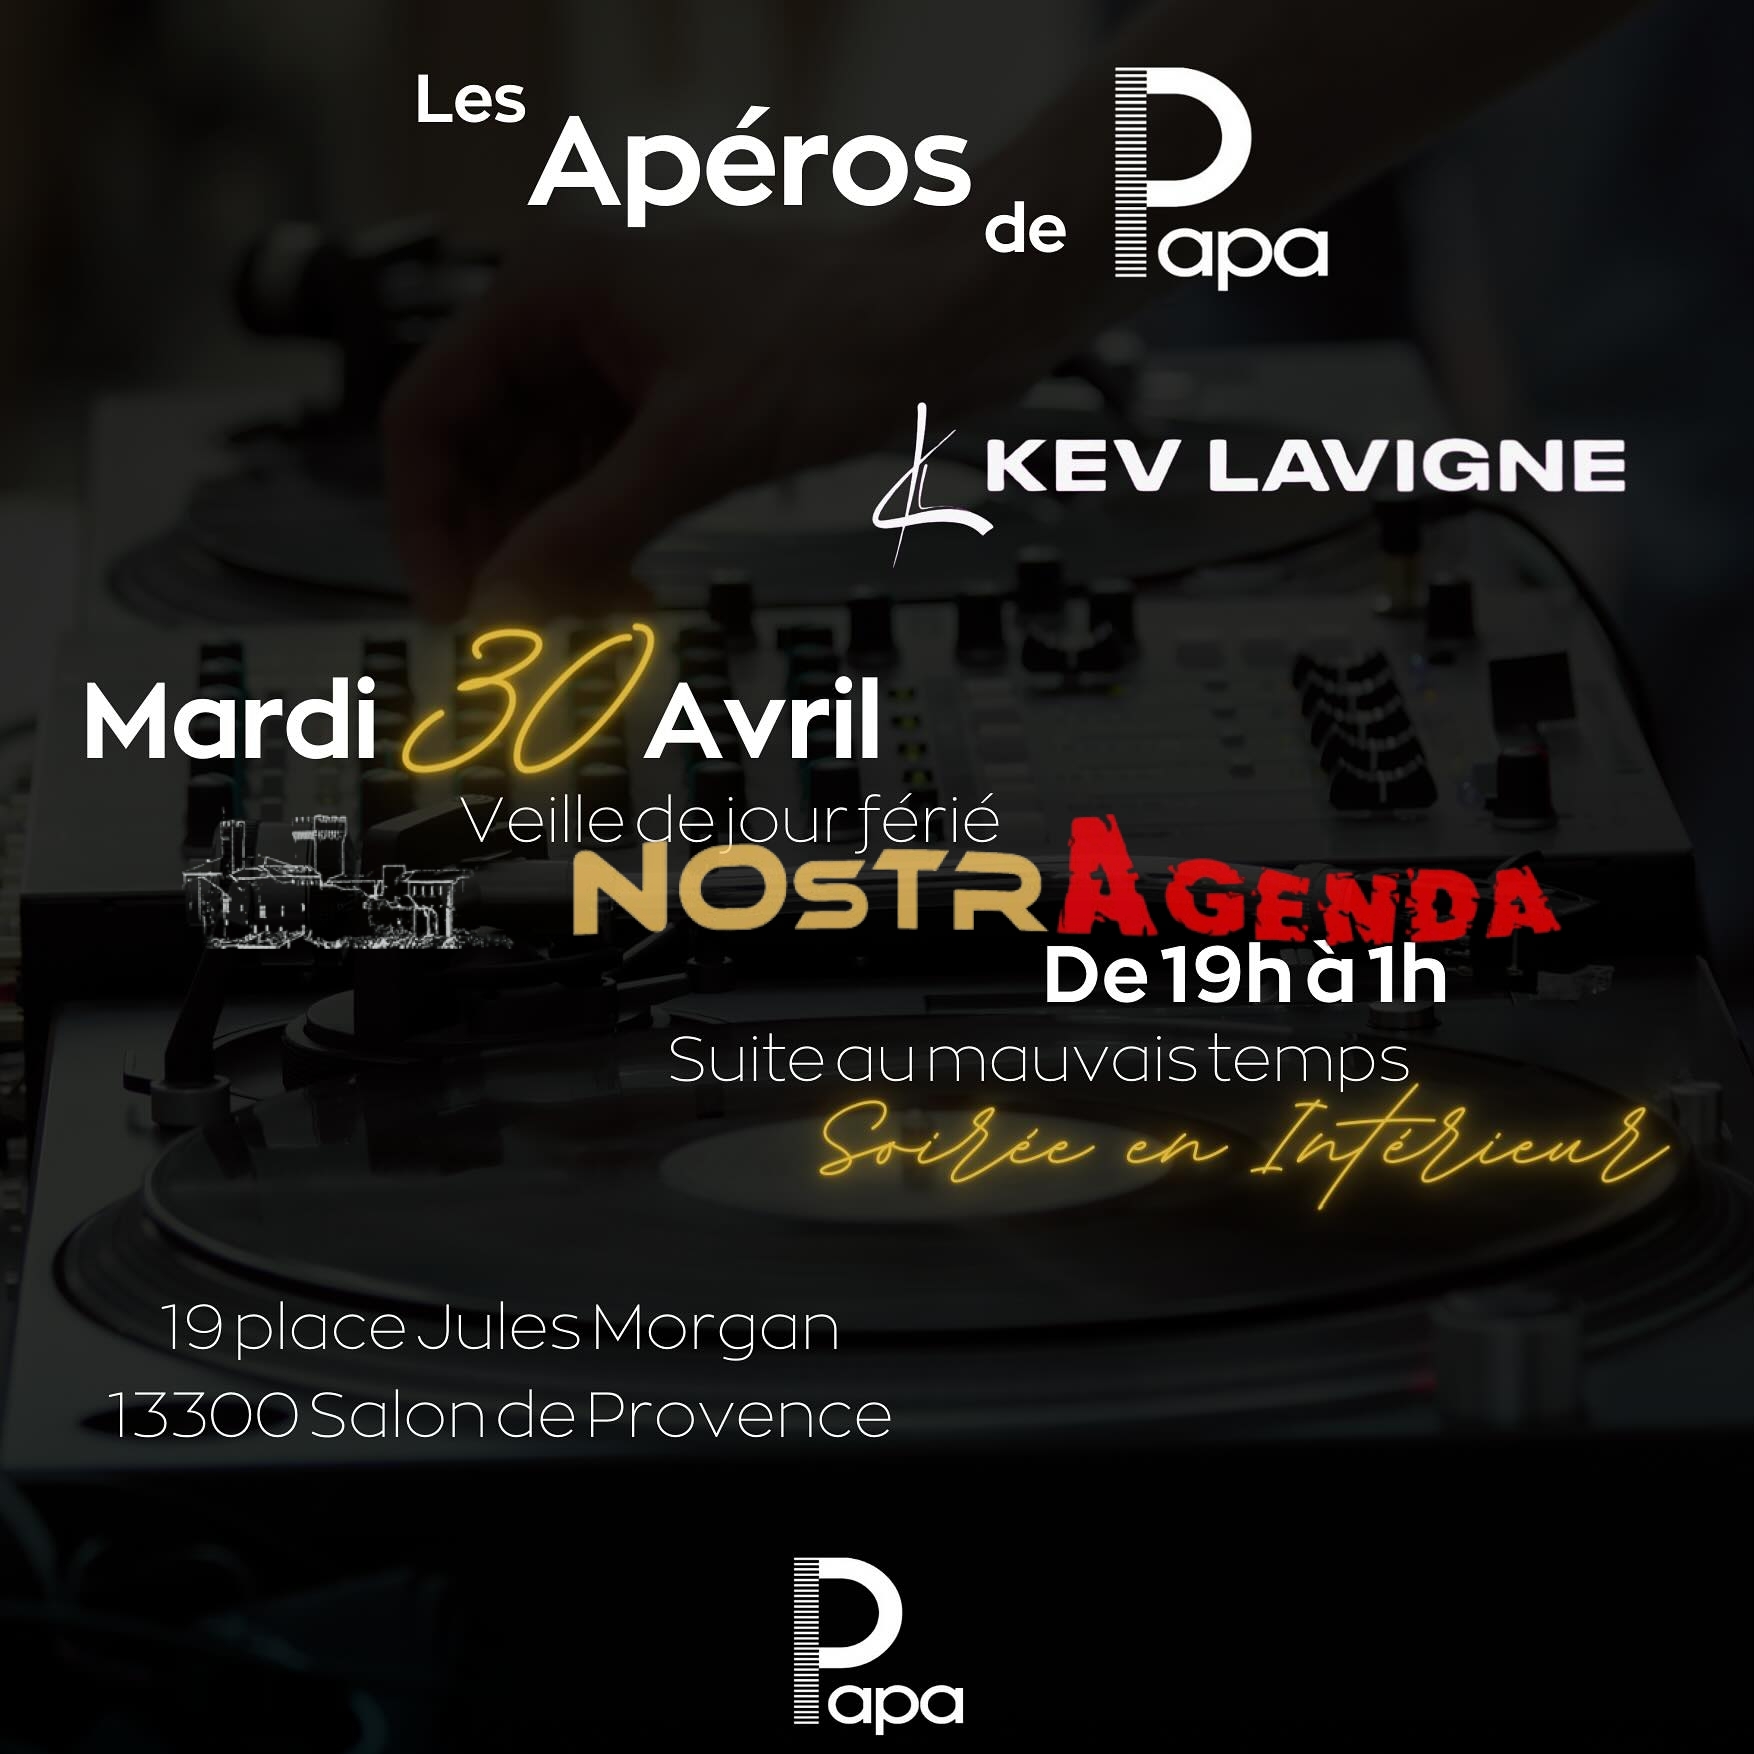 Les Apéros de Papa Kev Lavigne soirées agenda Nostragenda Salon de Provence